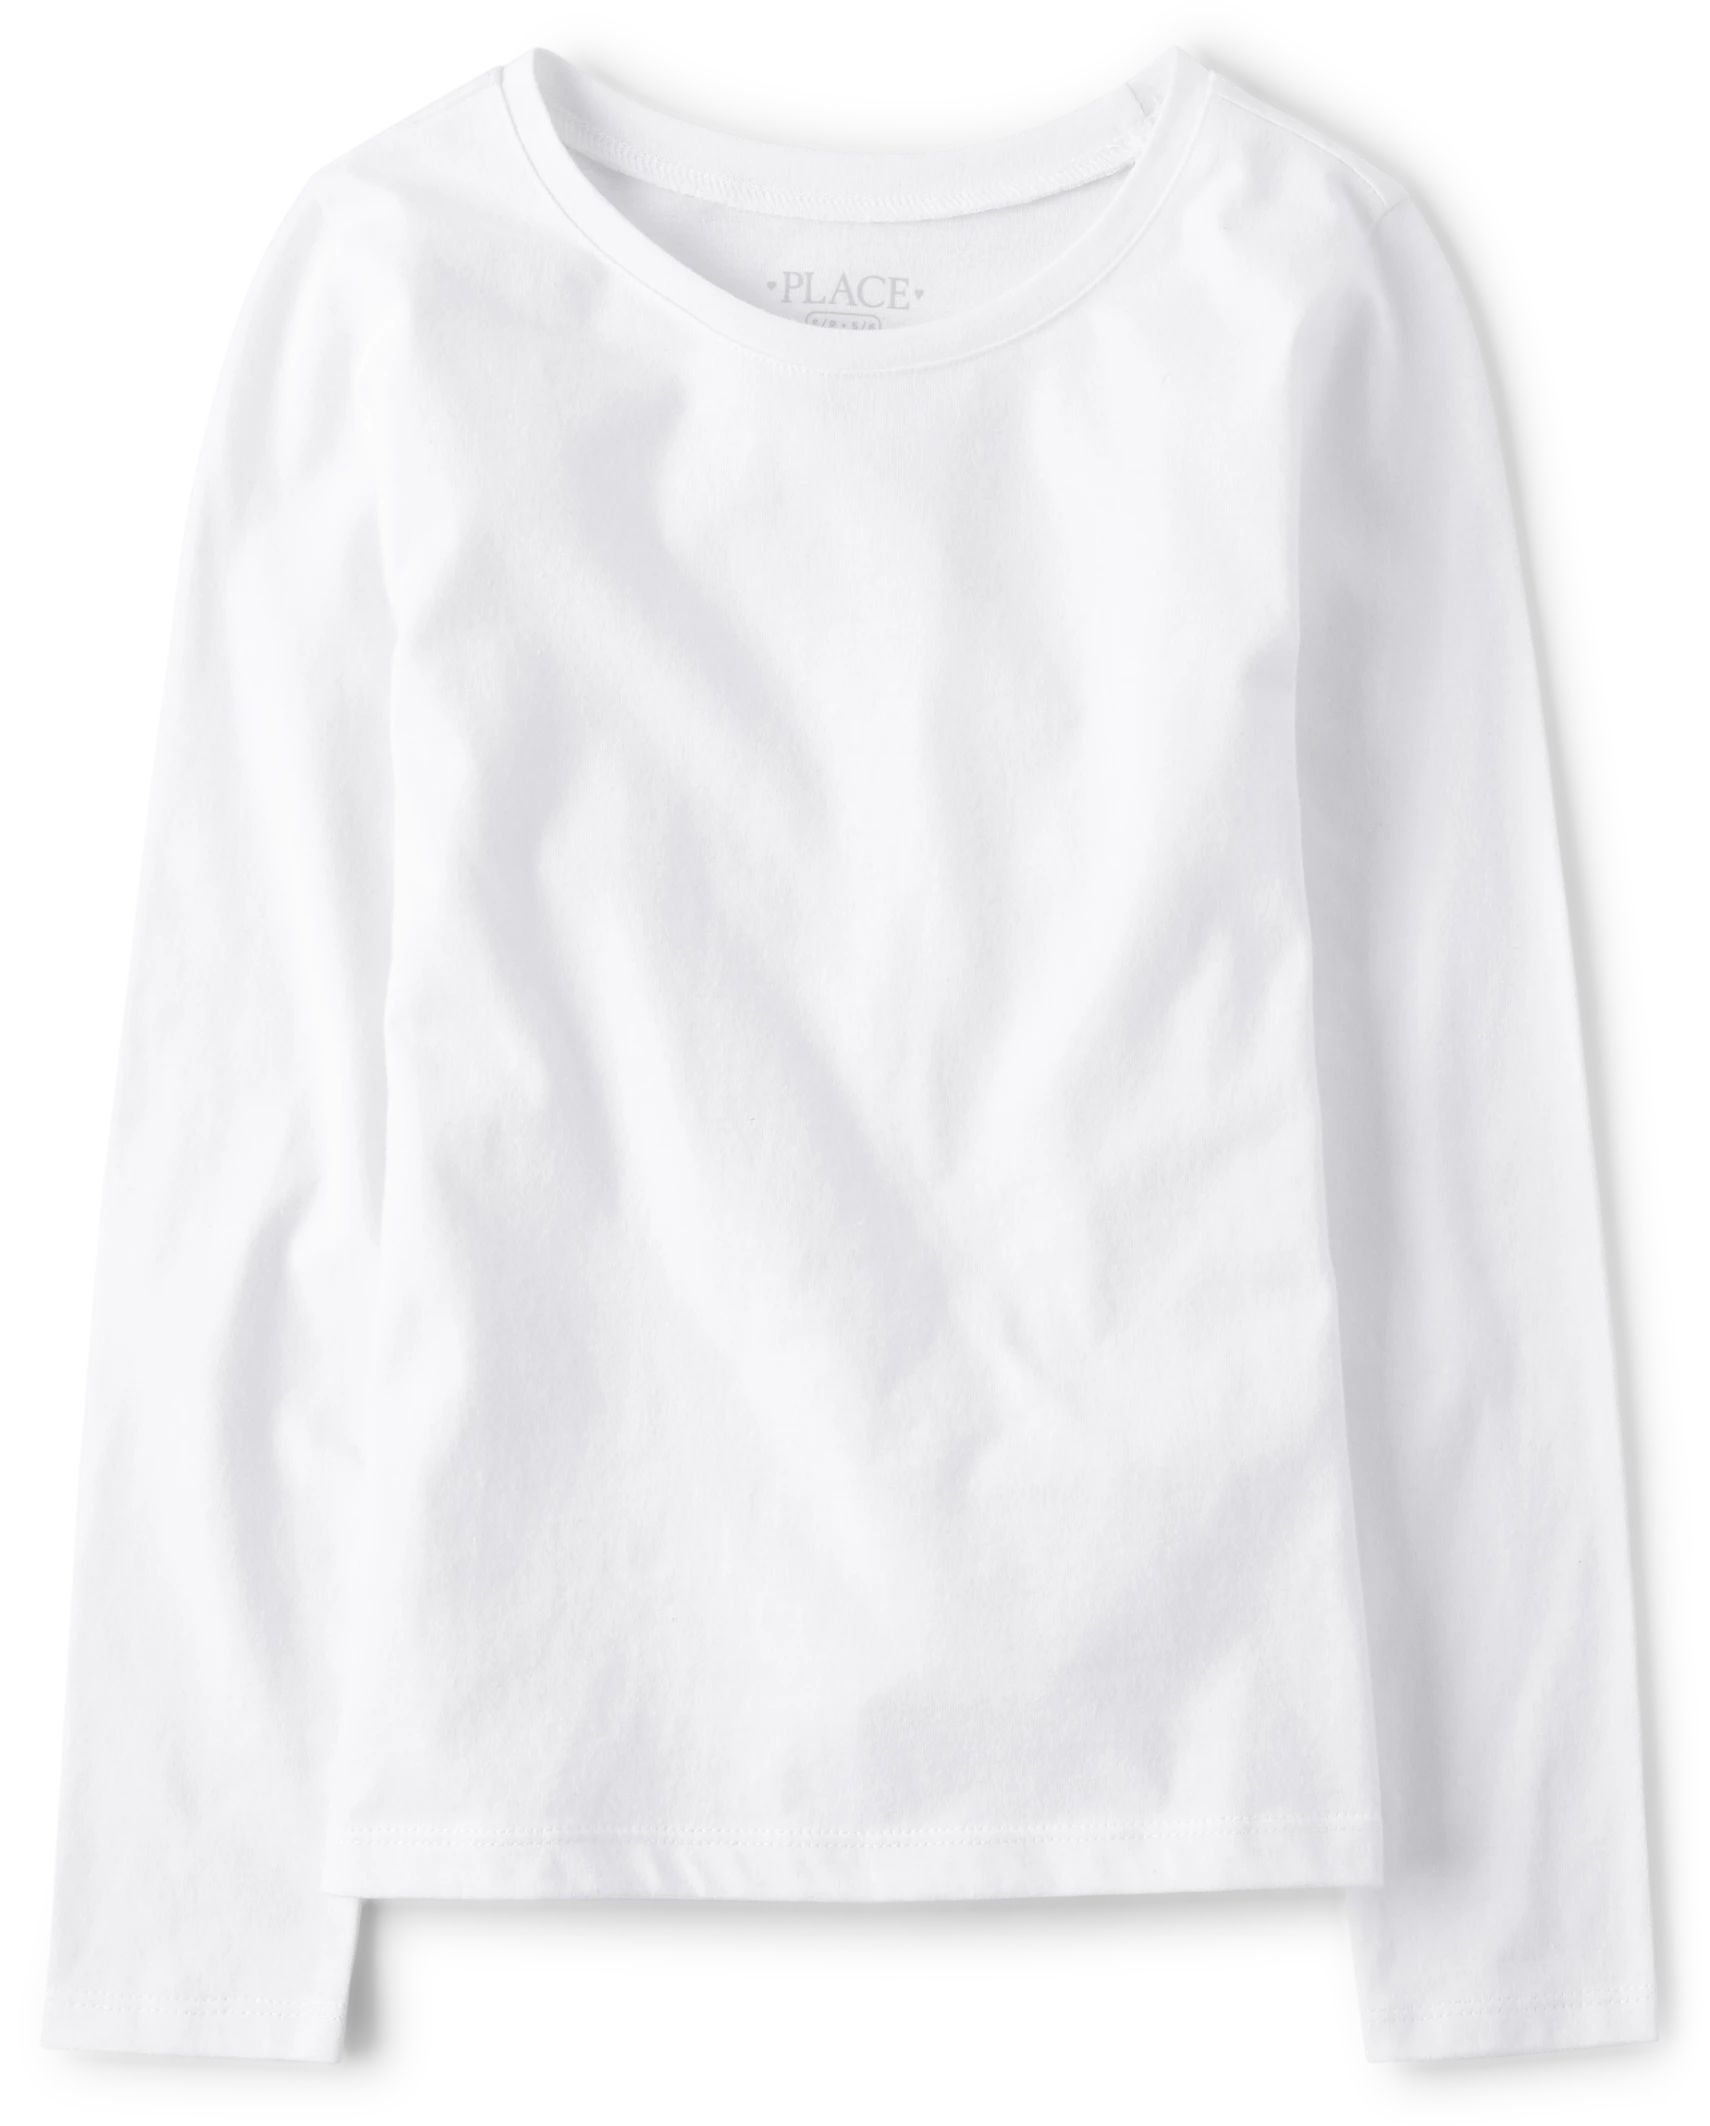 Girls Tee Shirt - white | The Children's Place